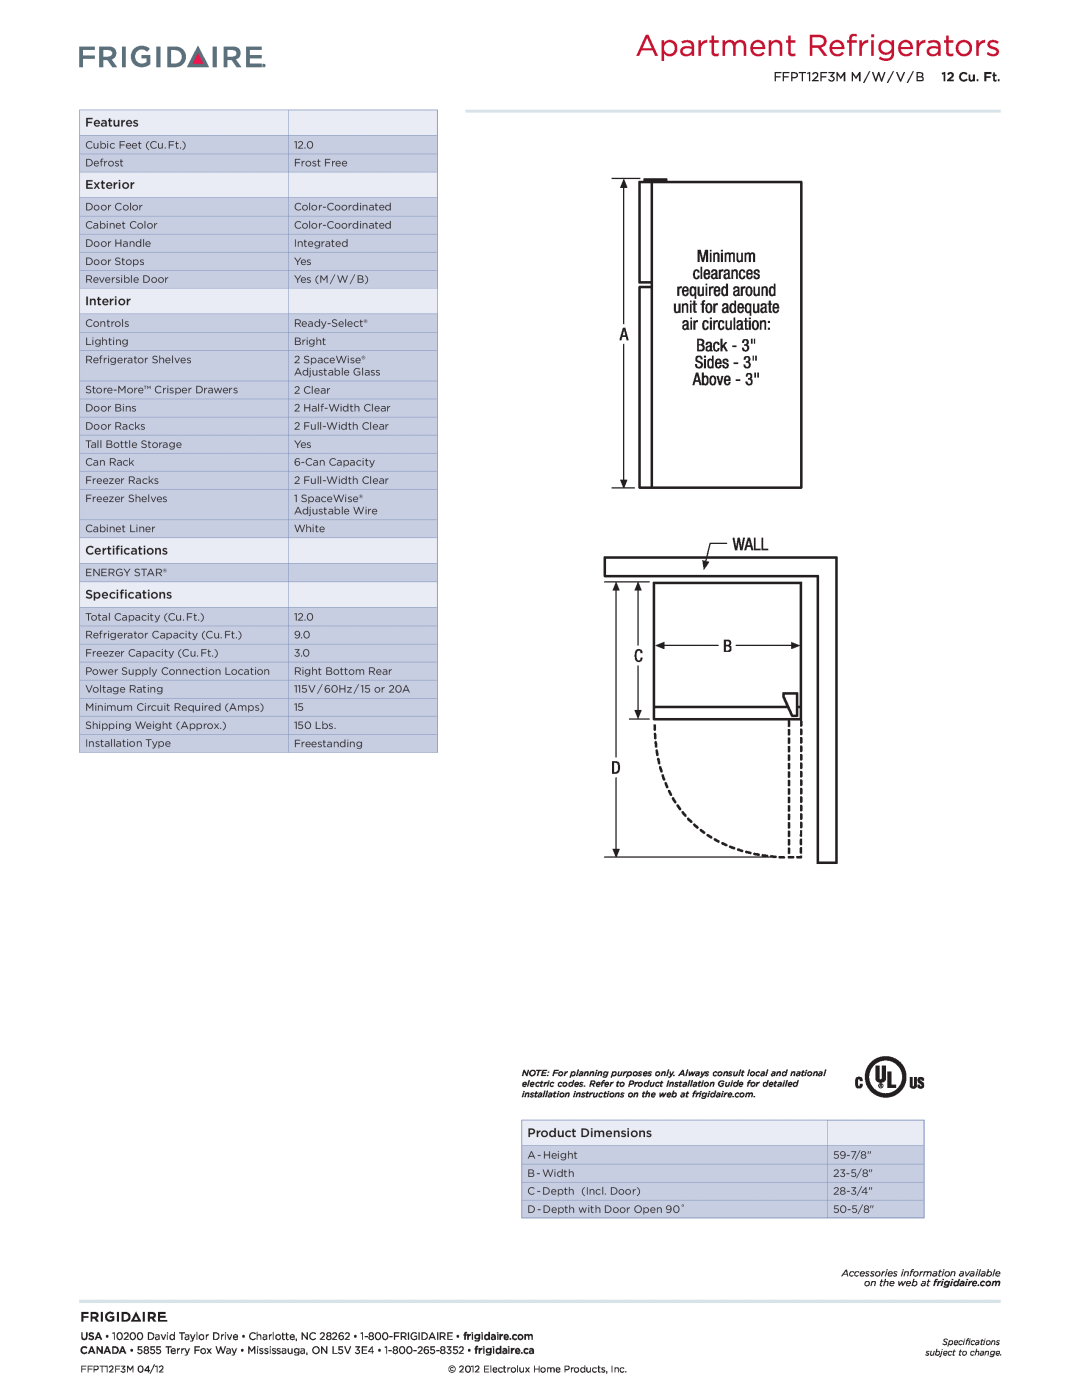 Frigidaire FFPT12F3M dimensions Apartment Refrigerators, Features, Exterior, Interior, Certifications, Specifications 